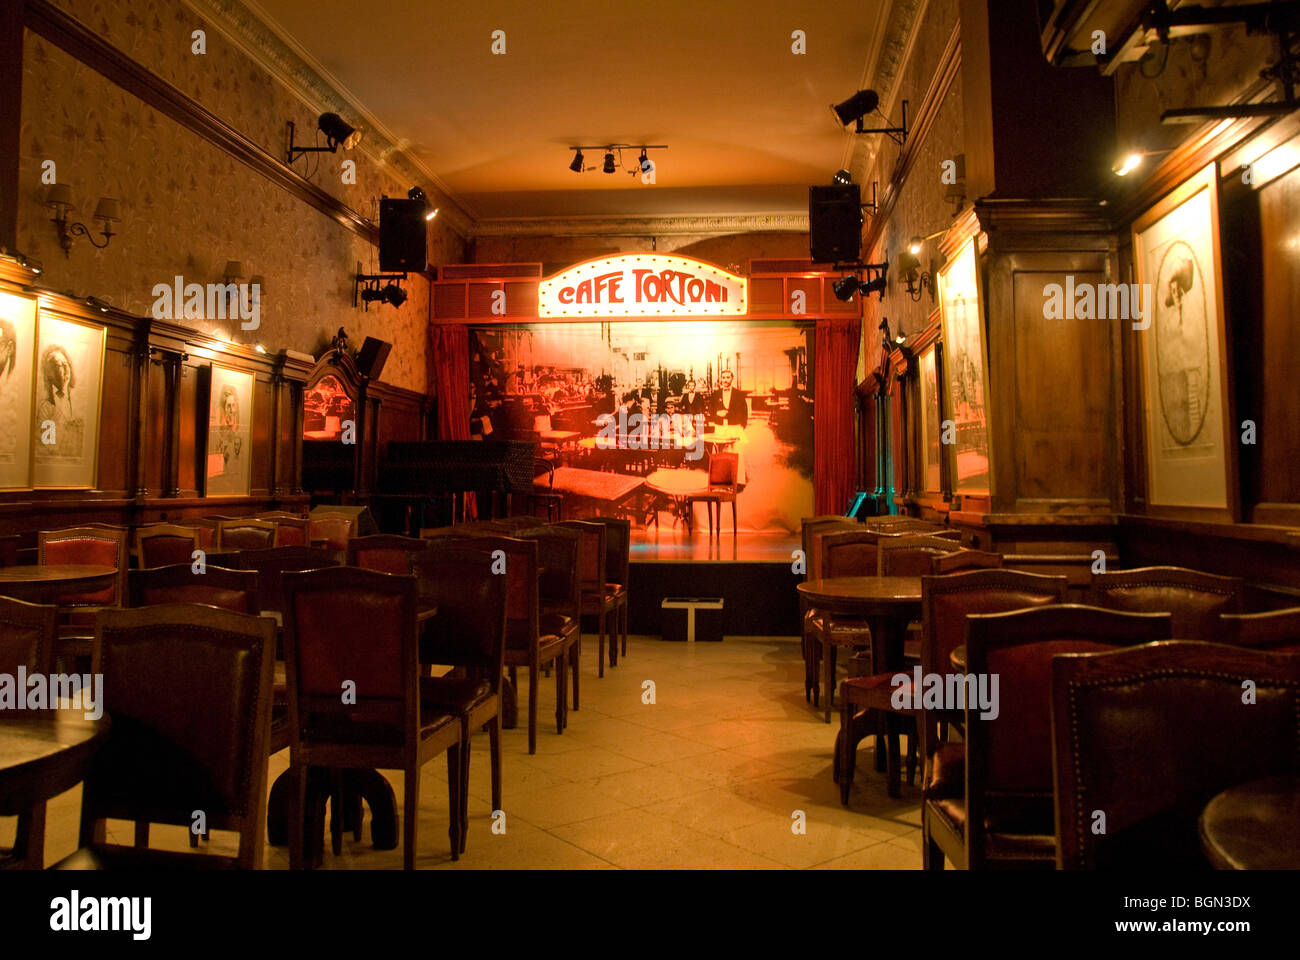 Interior of Cafe Tortoni in Buenos Aires, Argentina Stock Photo